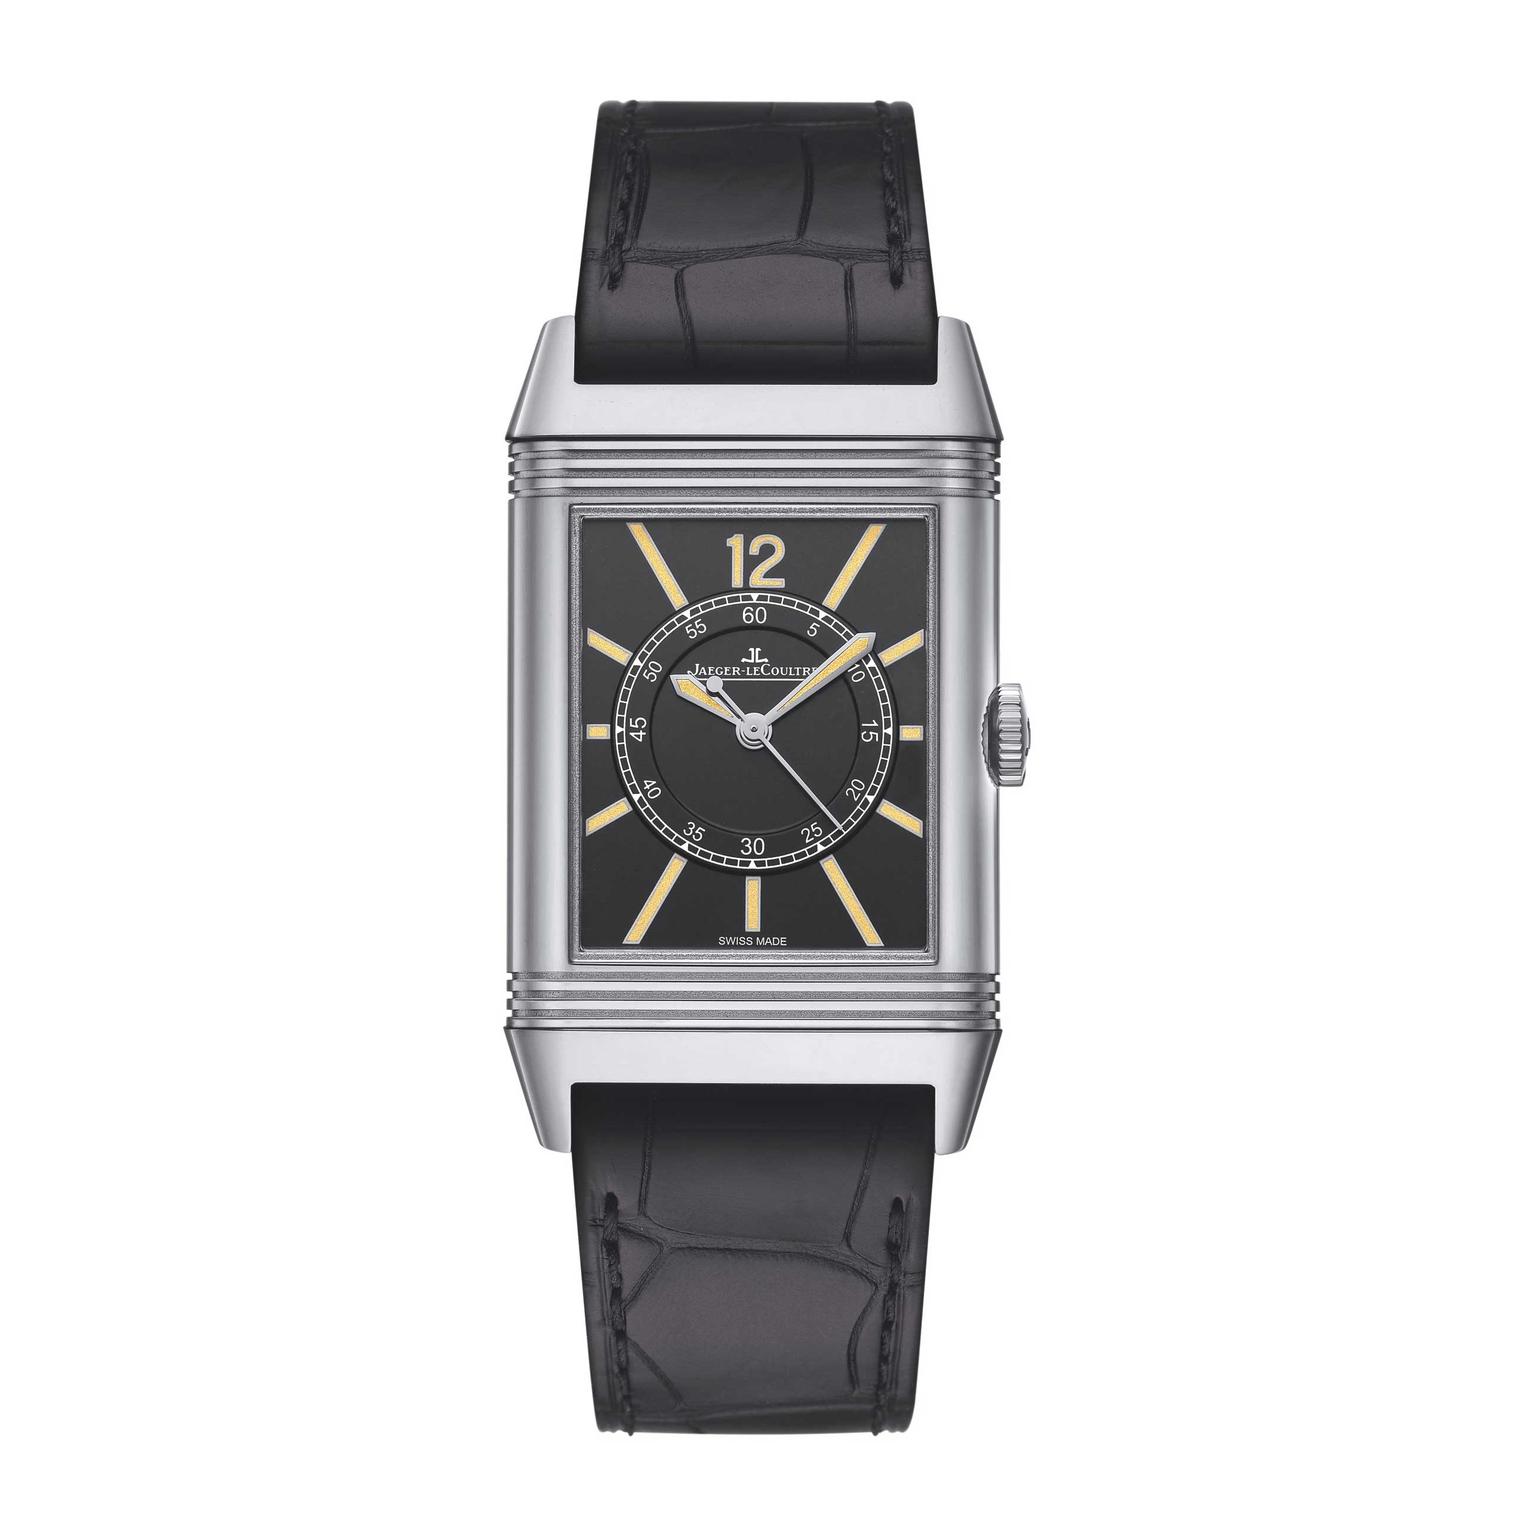 Jaeger-LeCoultre Grande Reverso 1931 Seconde Centrale watch